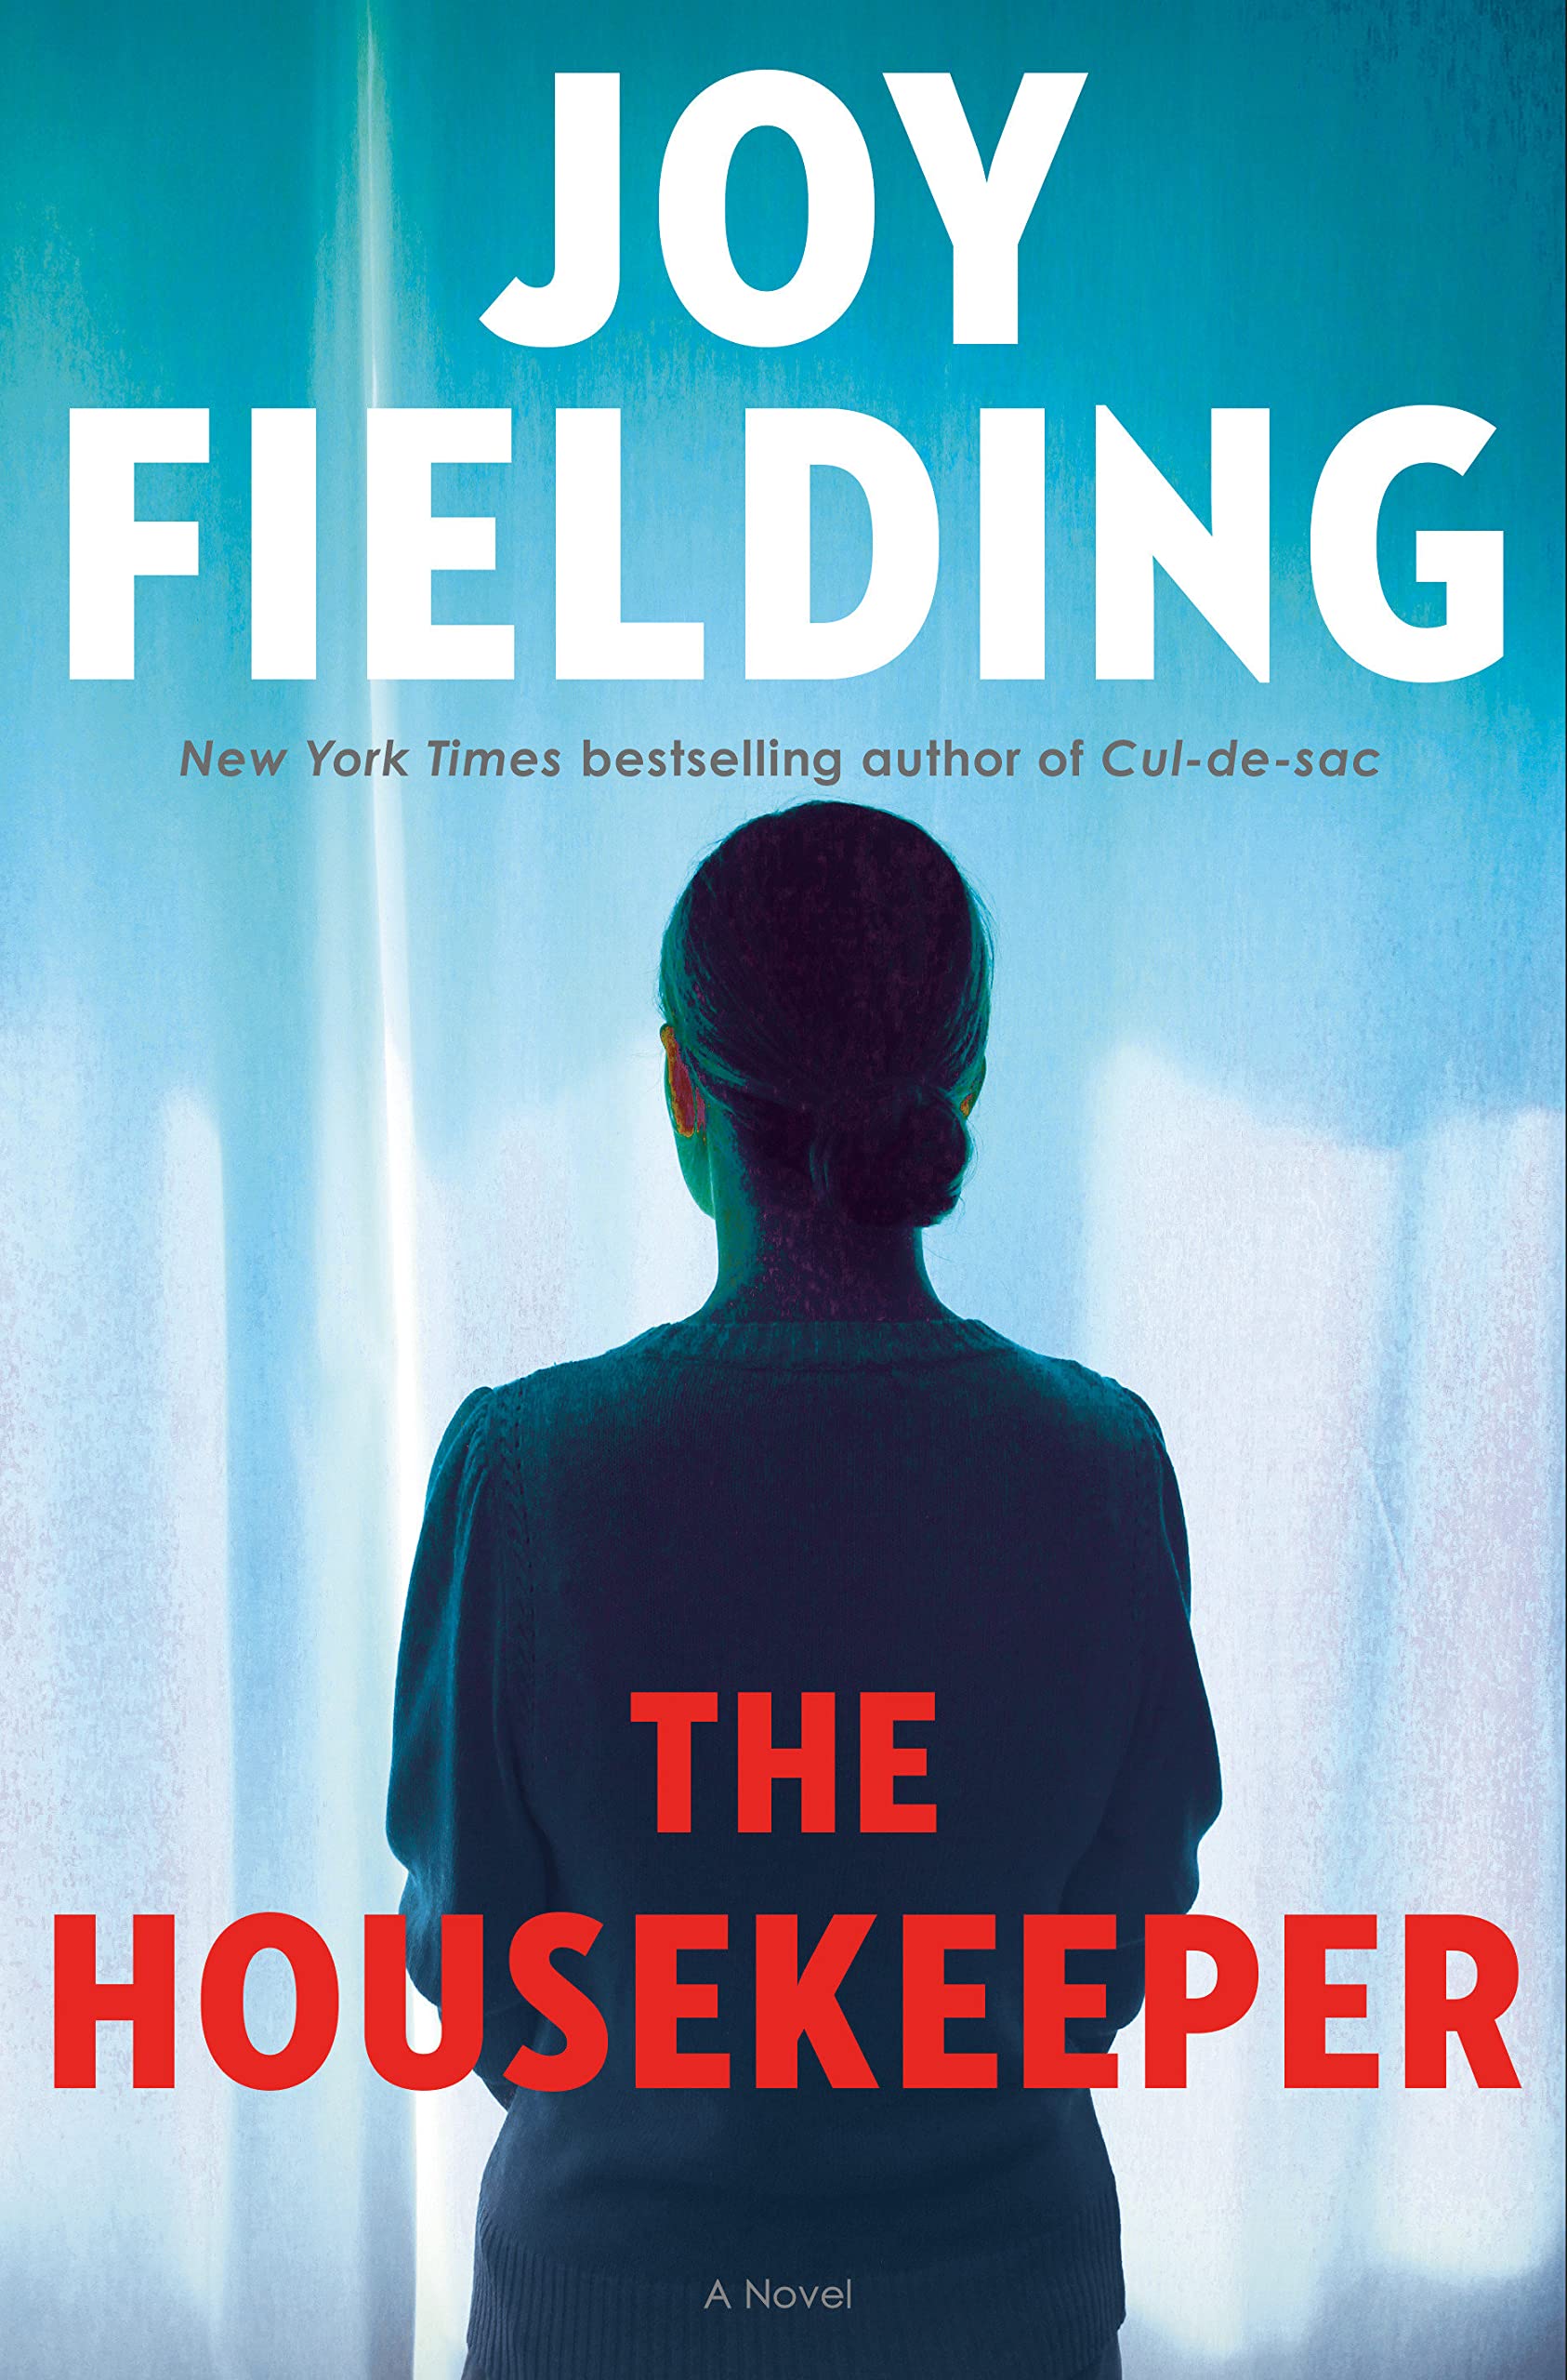 The Housekeeper Hardcover by Joy Fielding